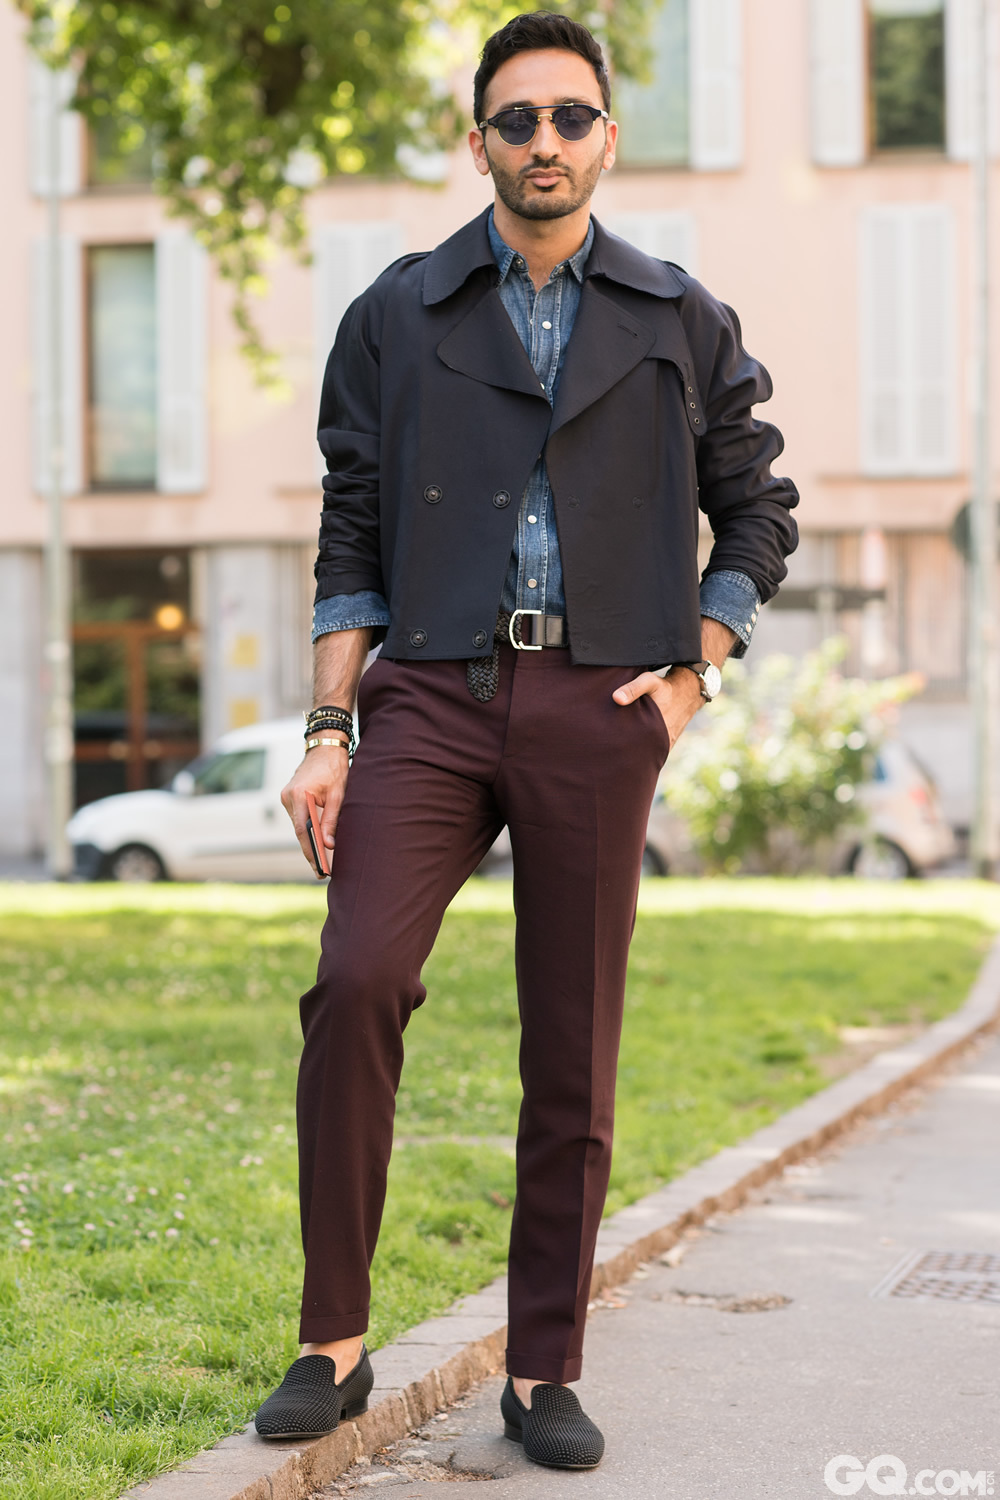 Ahssan
Jacket: Lanvin
Shirt: YSL
Belt: Tom Ford
Pants: Prada
Shoes: Lou Steven
Sunglasses: Tom Browne
Watch: Cartier

Inspiration: Casual but elegant
（闲适又优雅）